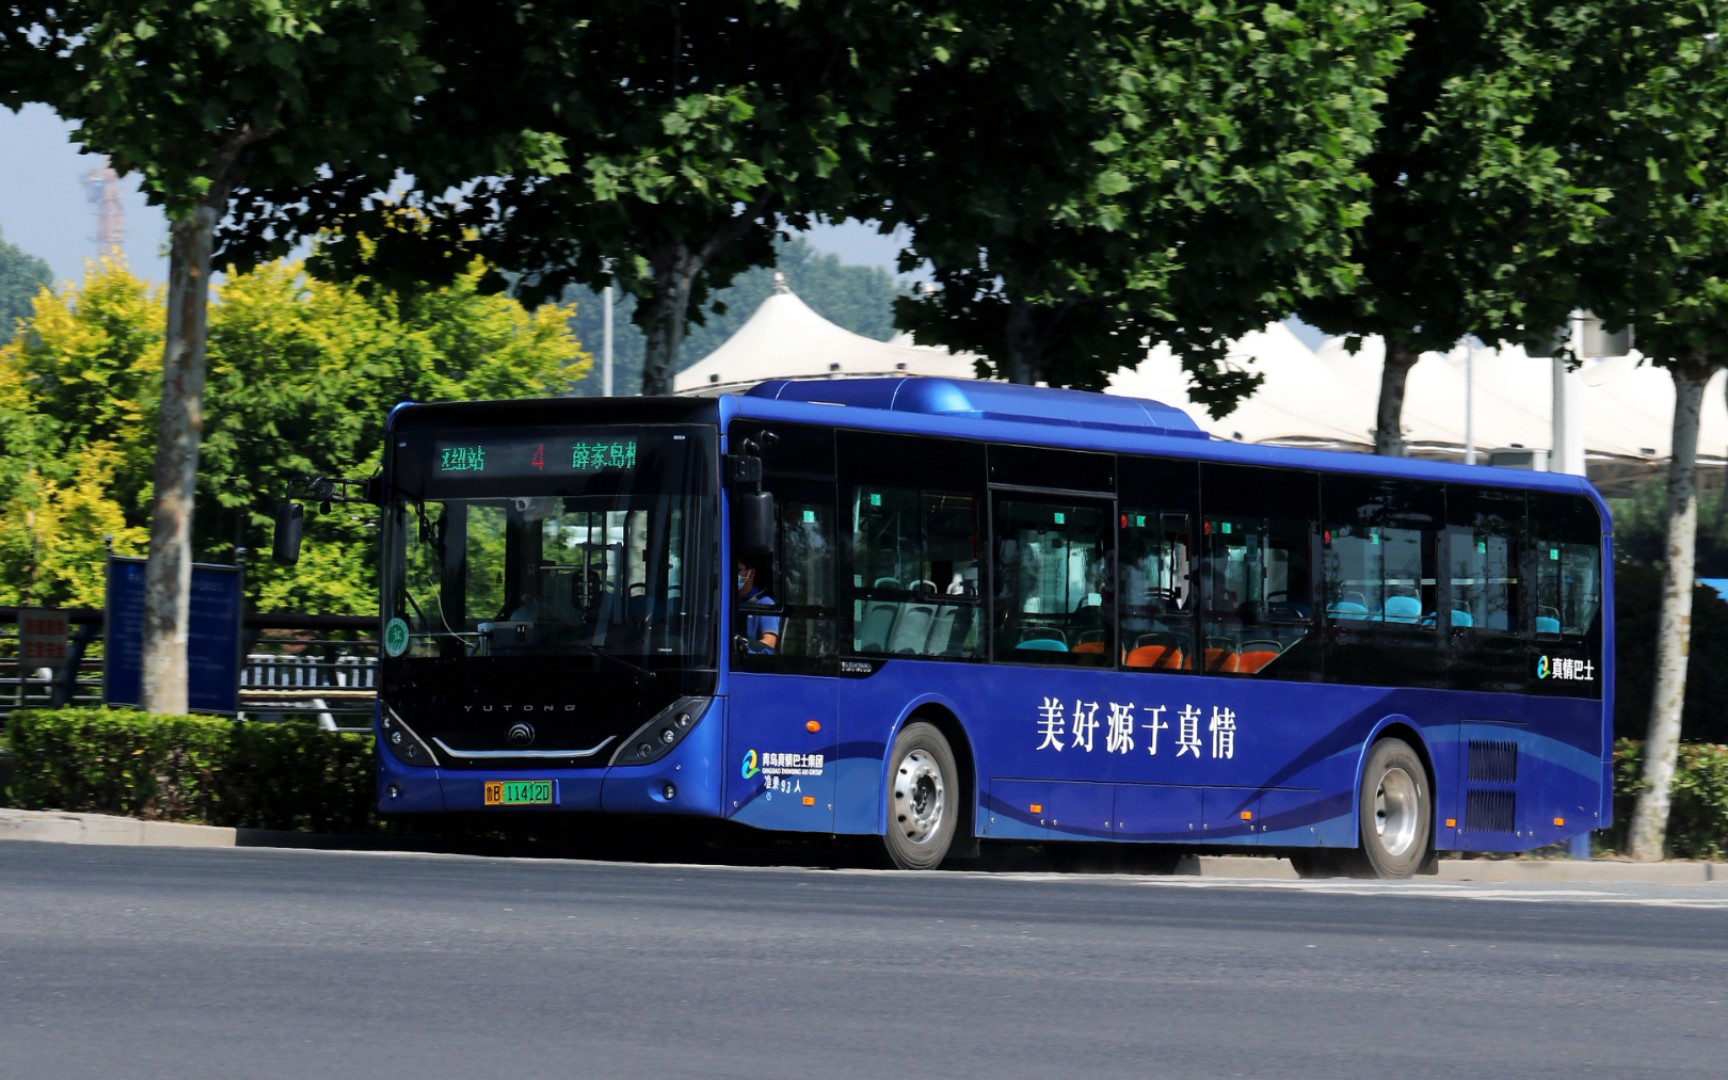 【gog】青岛公交摄影合集·宇通e12i真情巴士2021版